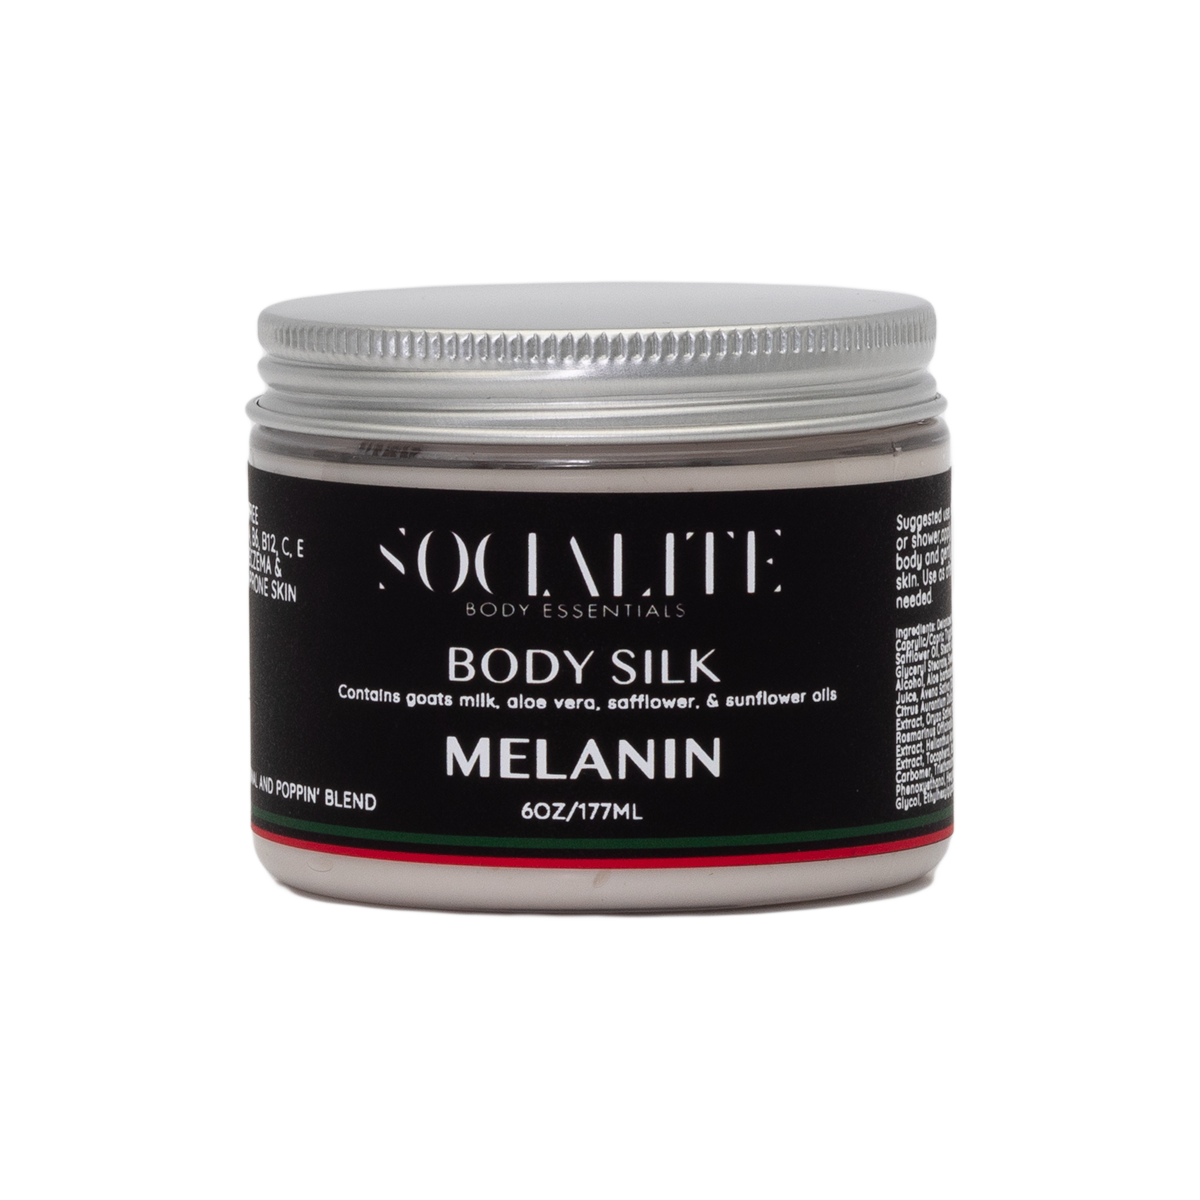 Melanin Collection - Socialite Body Essentials